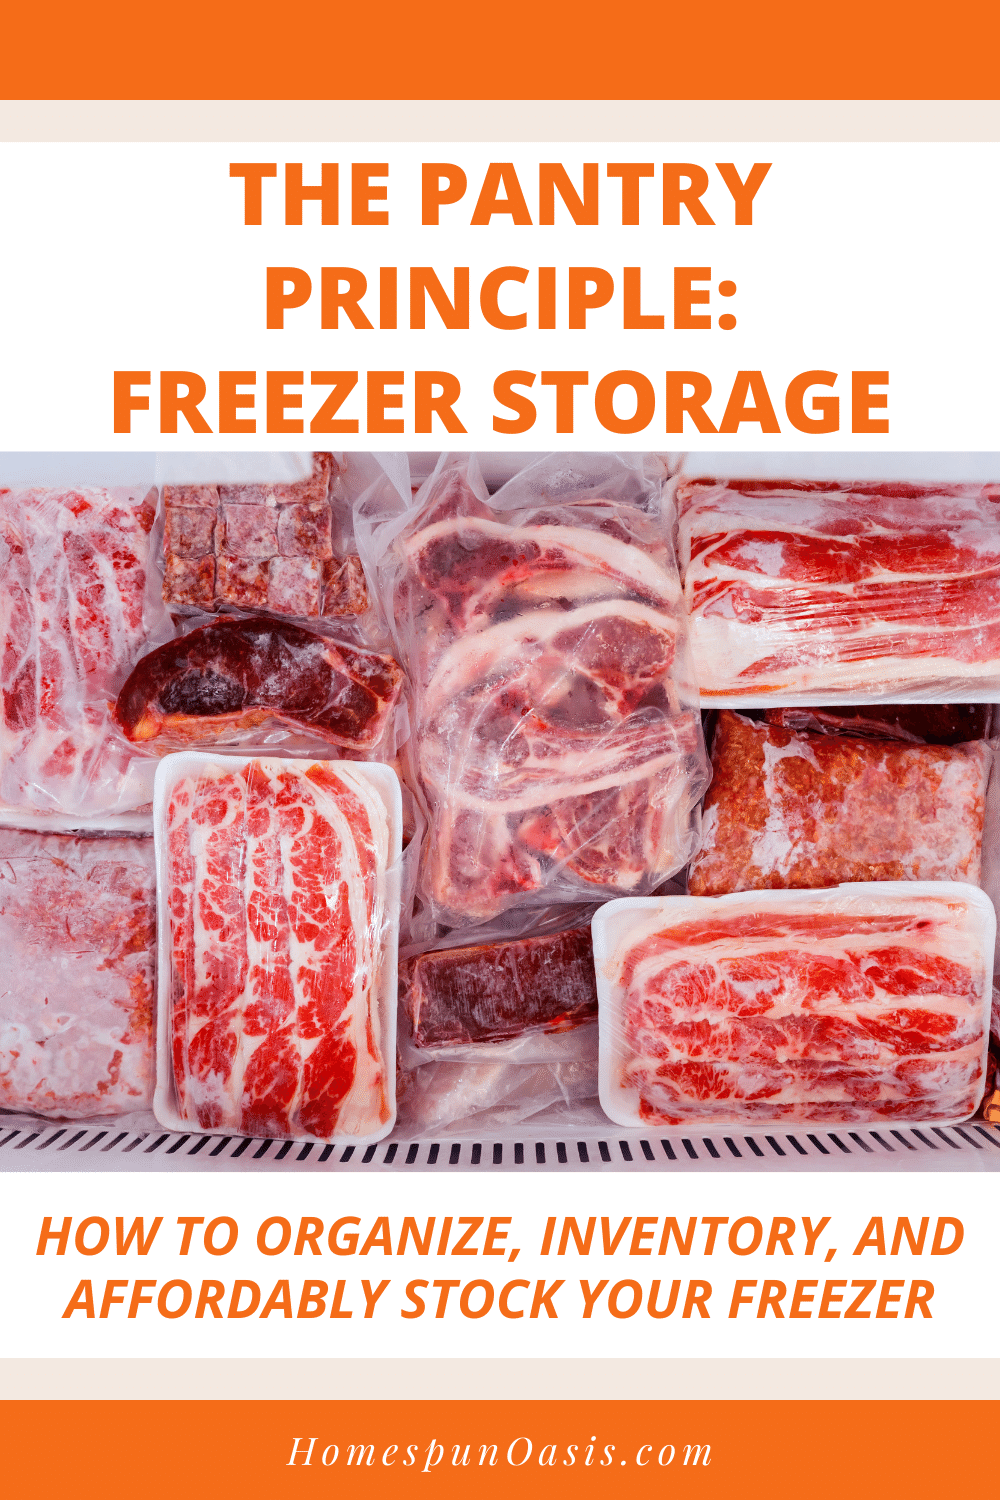 Freezer Storage: The Pantry Principle